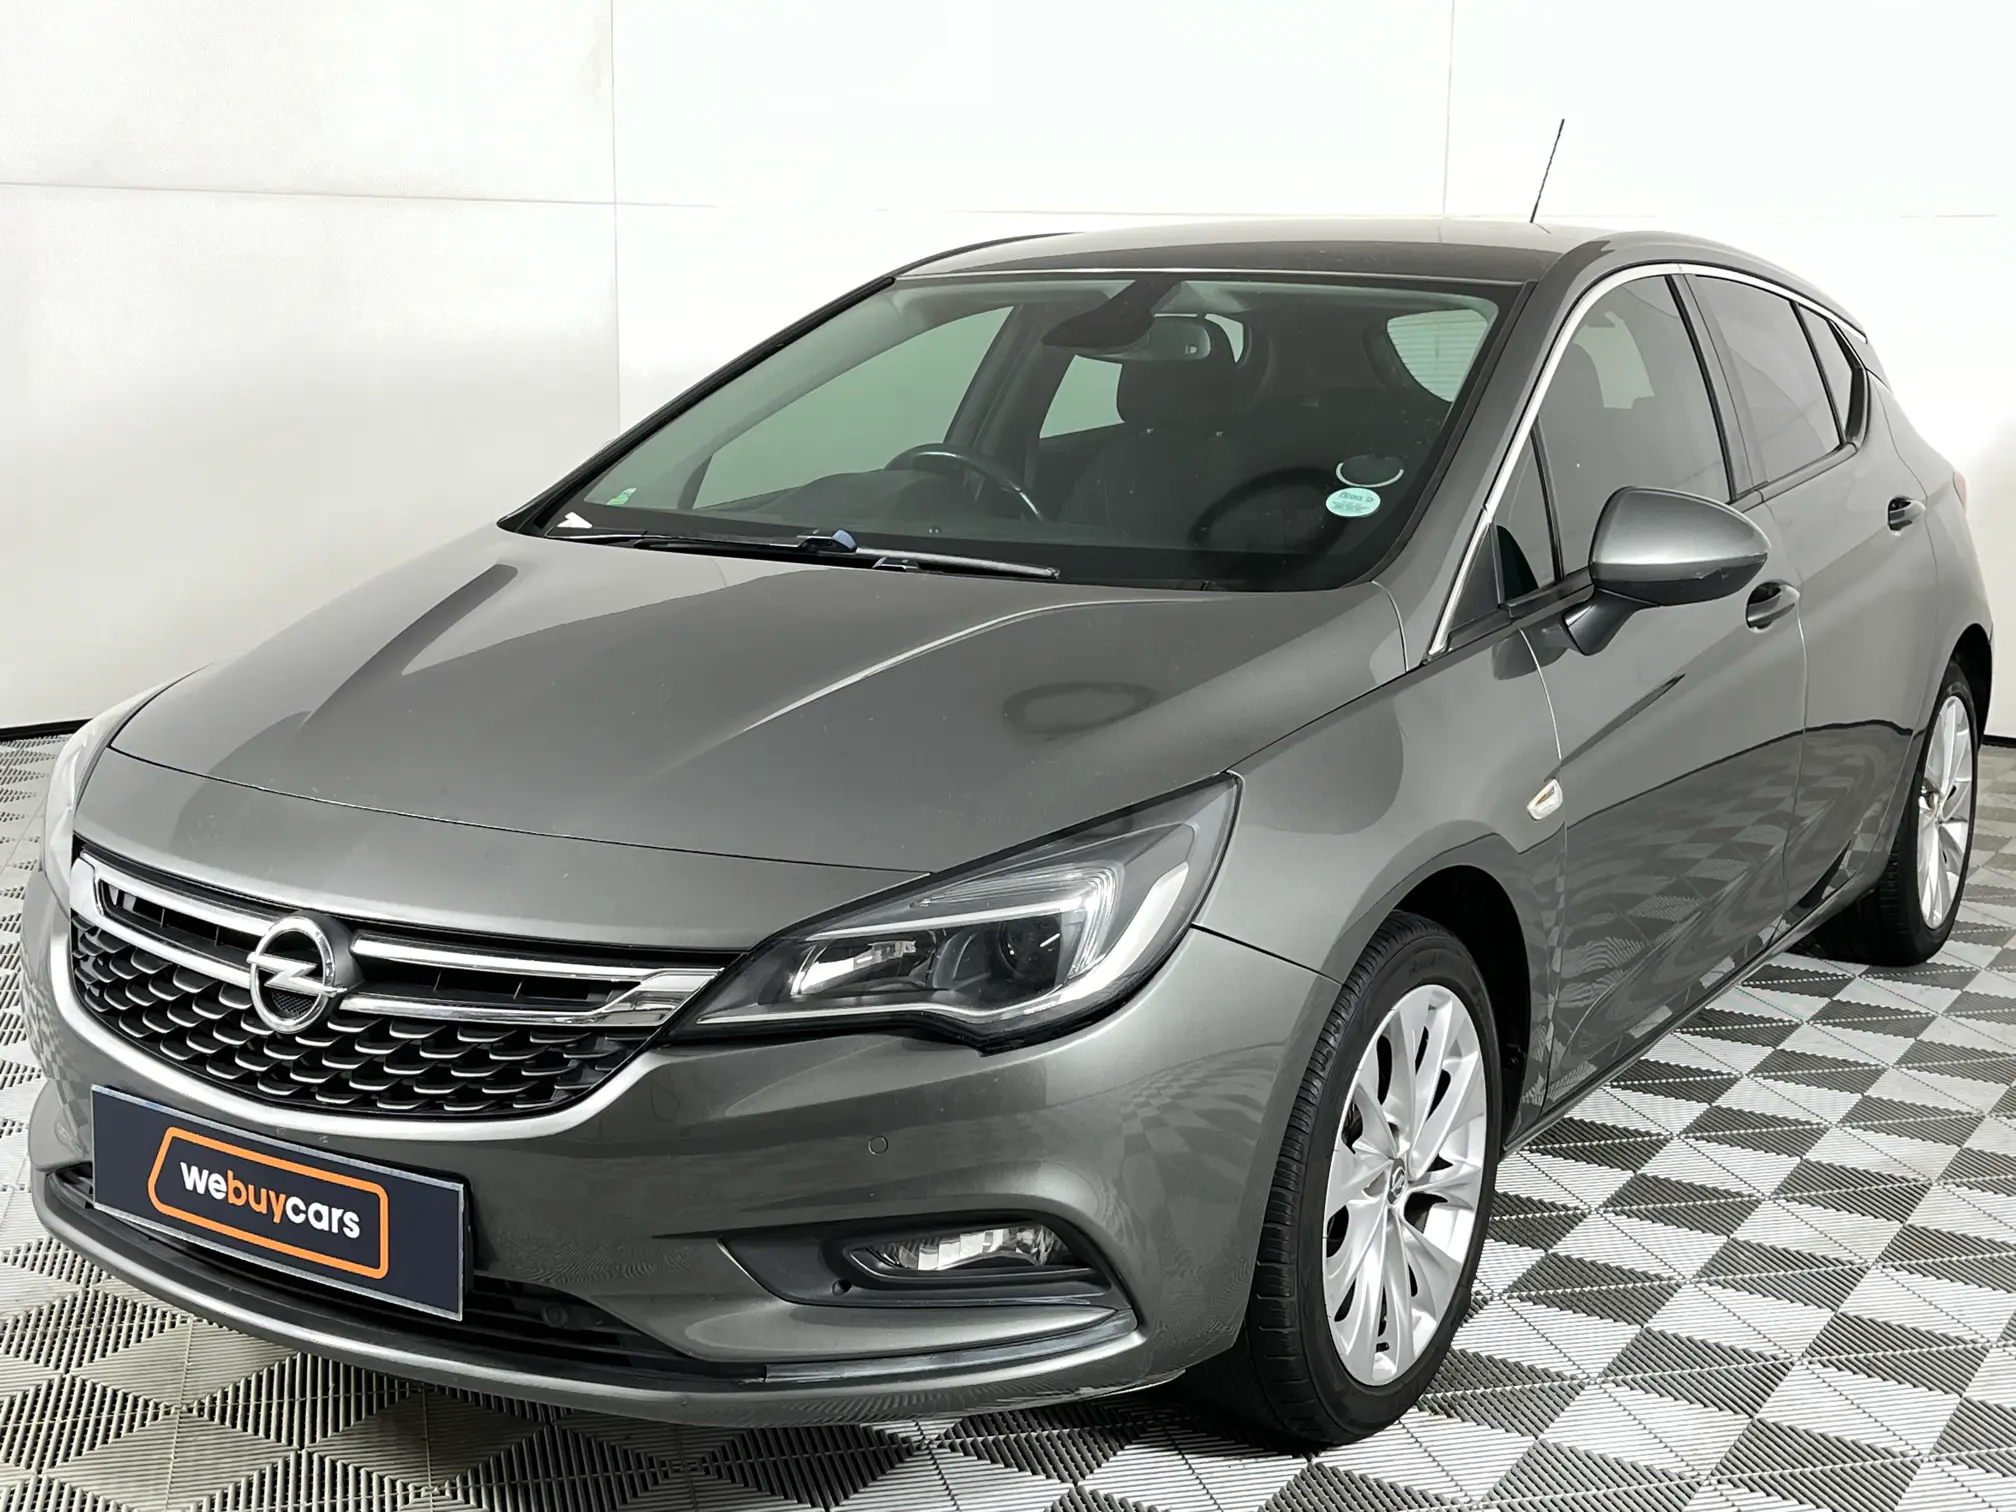 2017 Opel Astra 1.0T Enjoy (5dr)